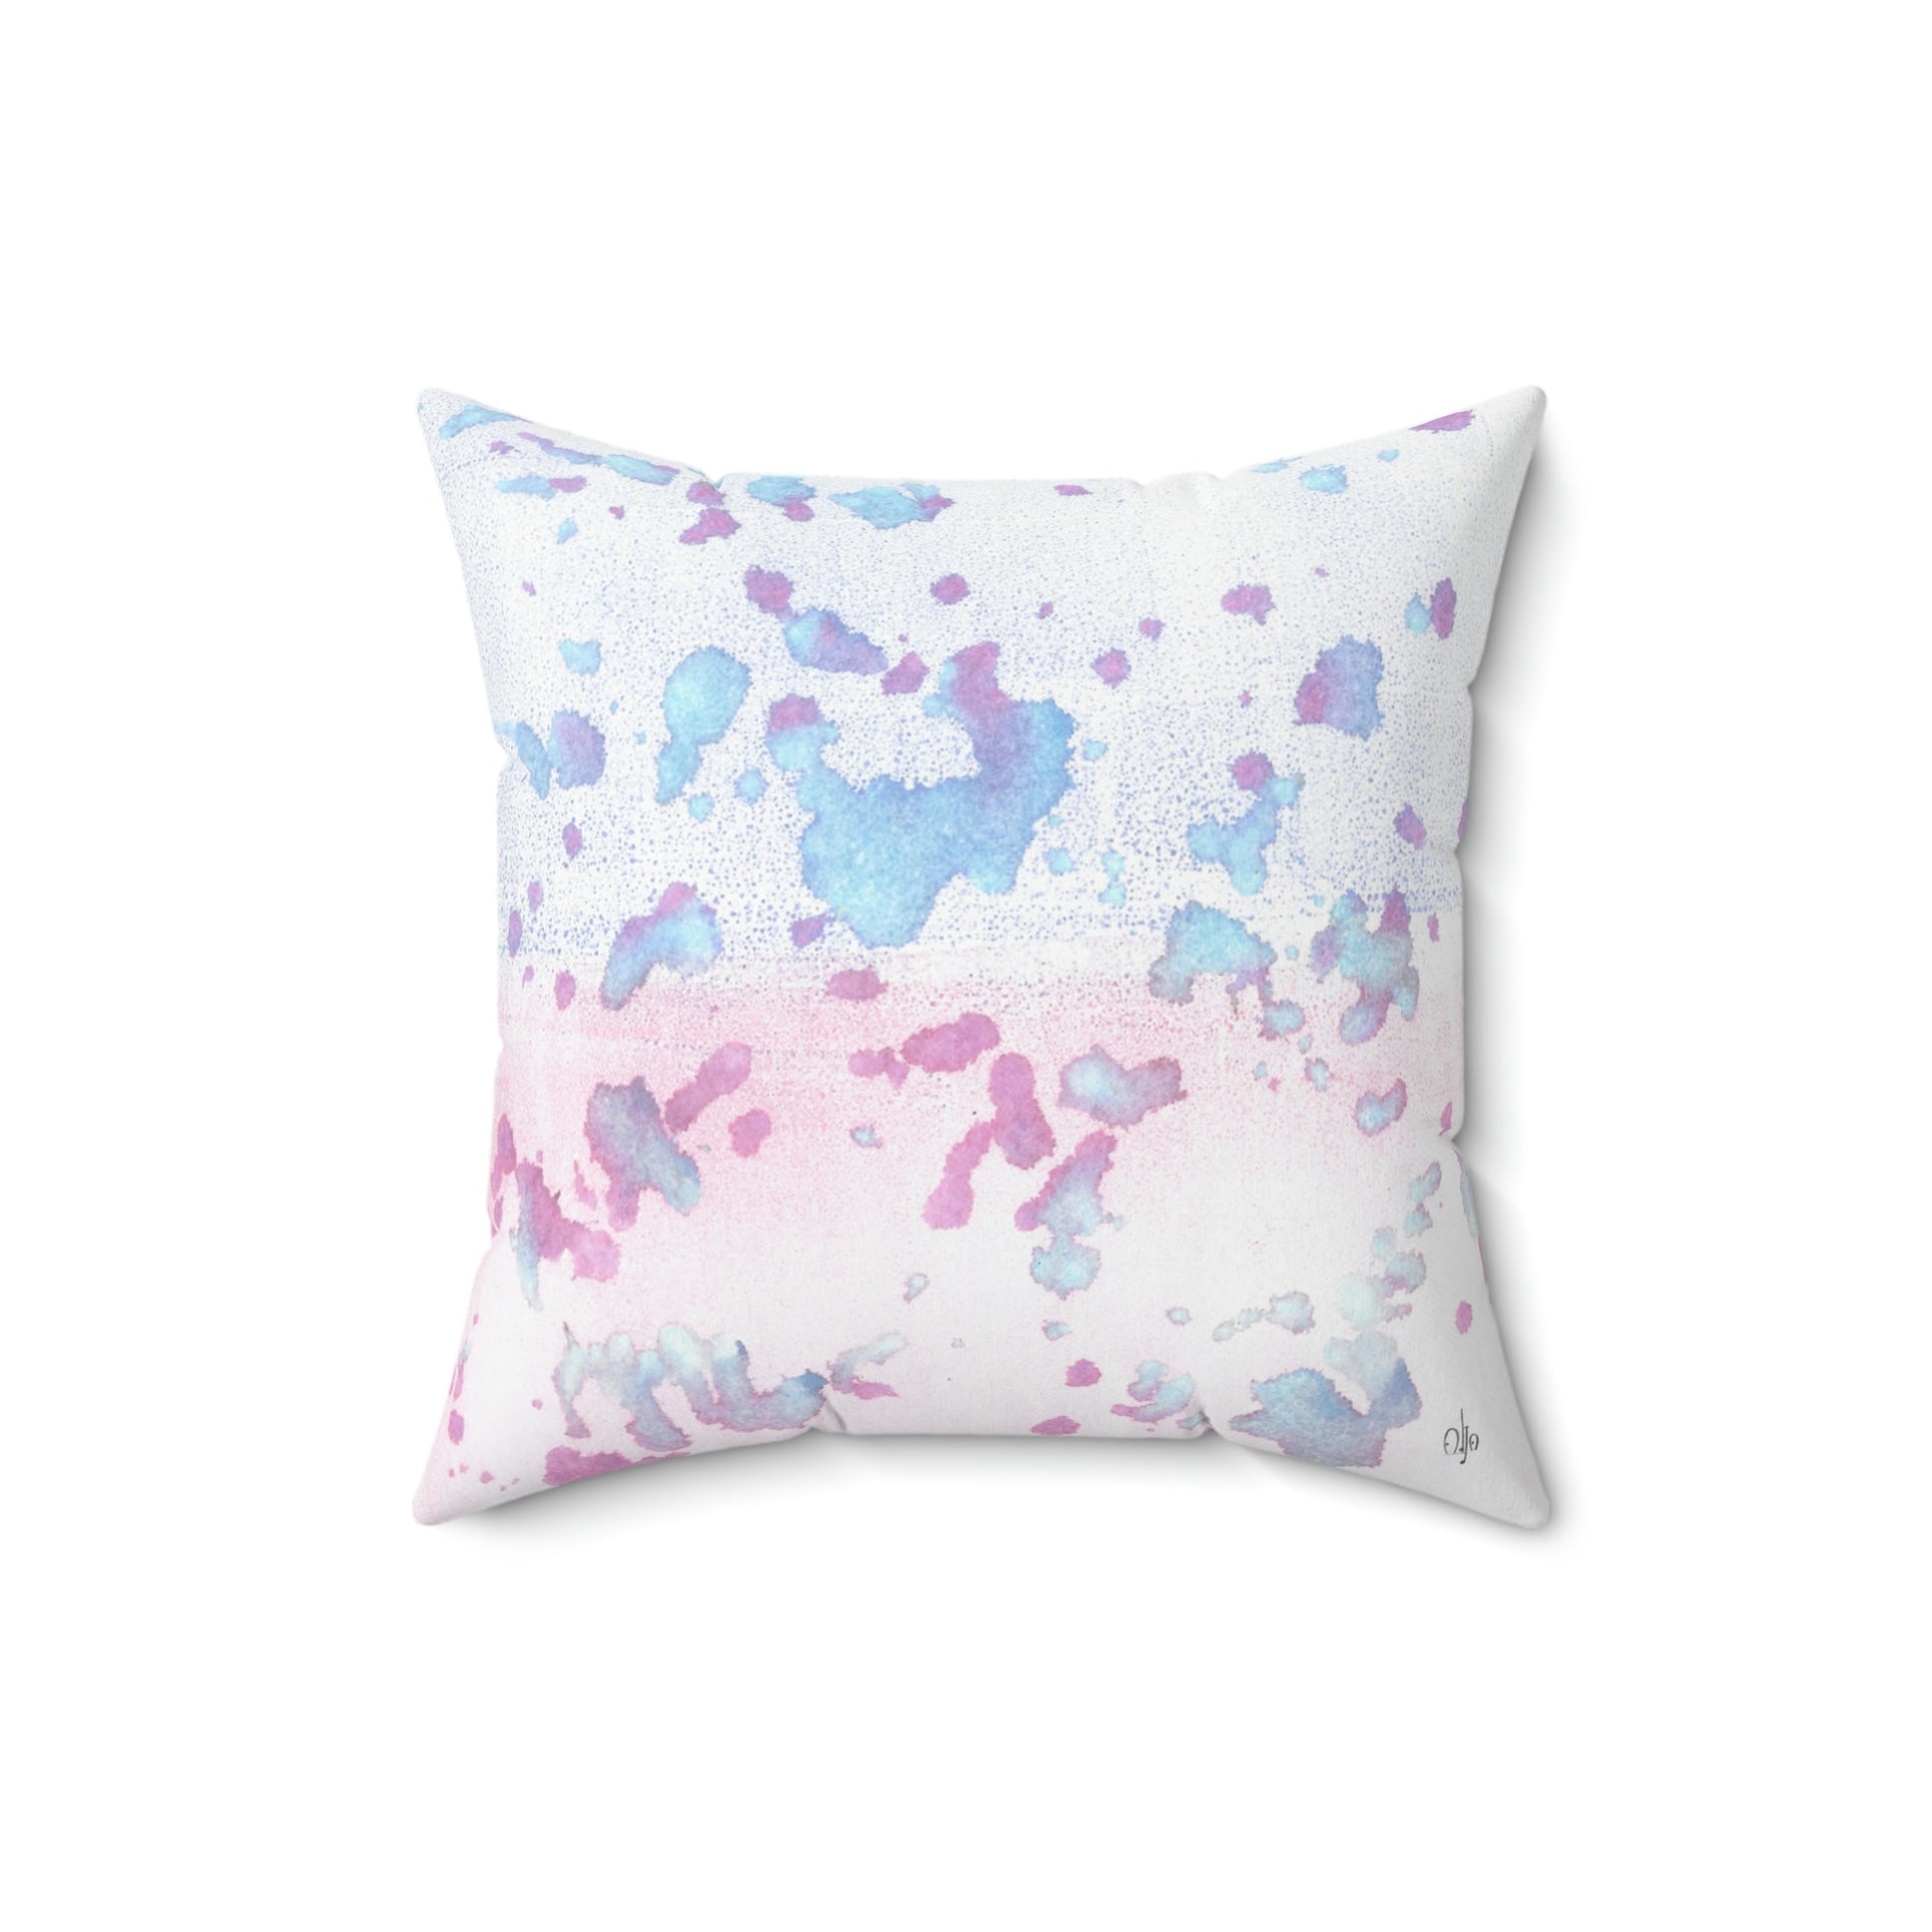 Mineral Splashes Square Pillow - Alja Design